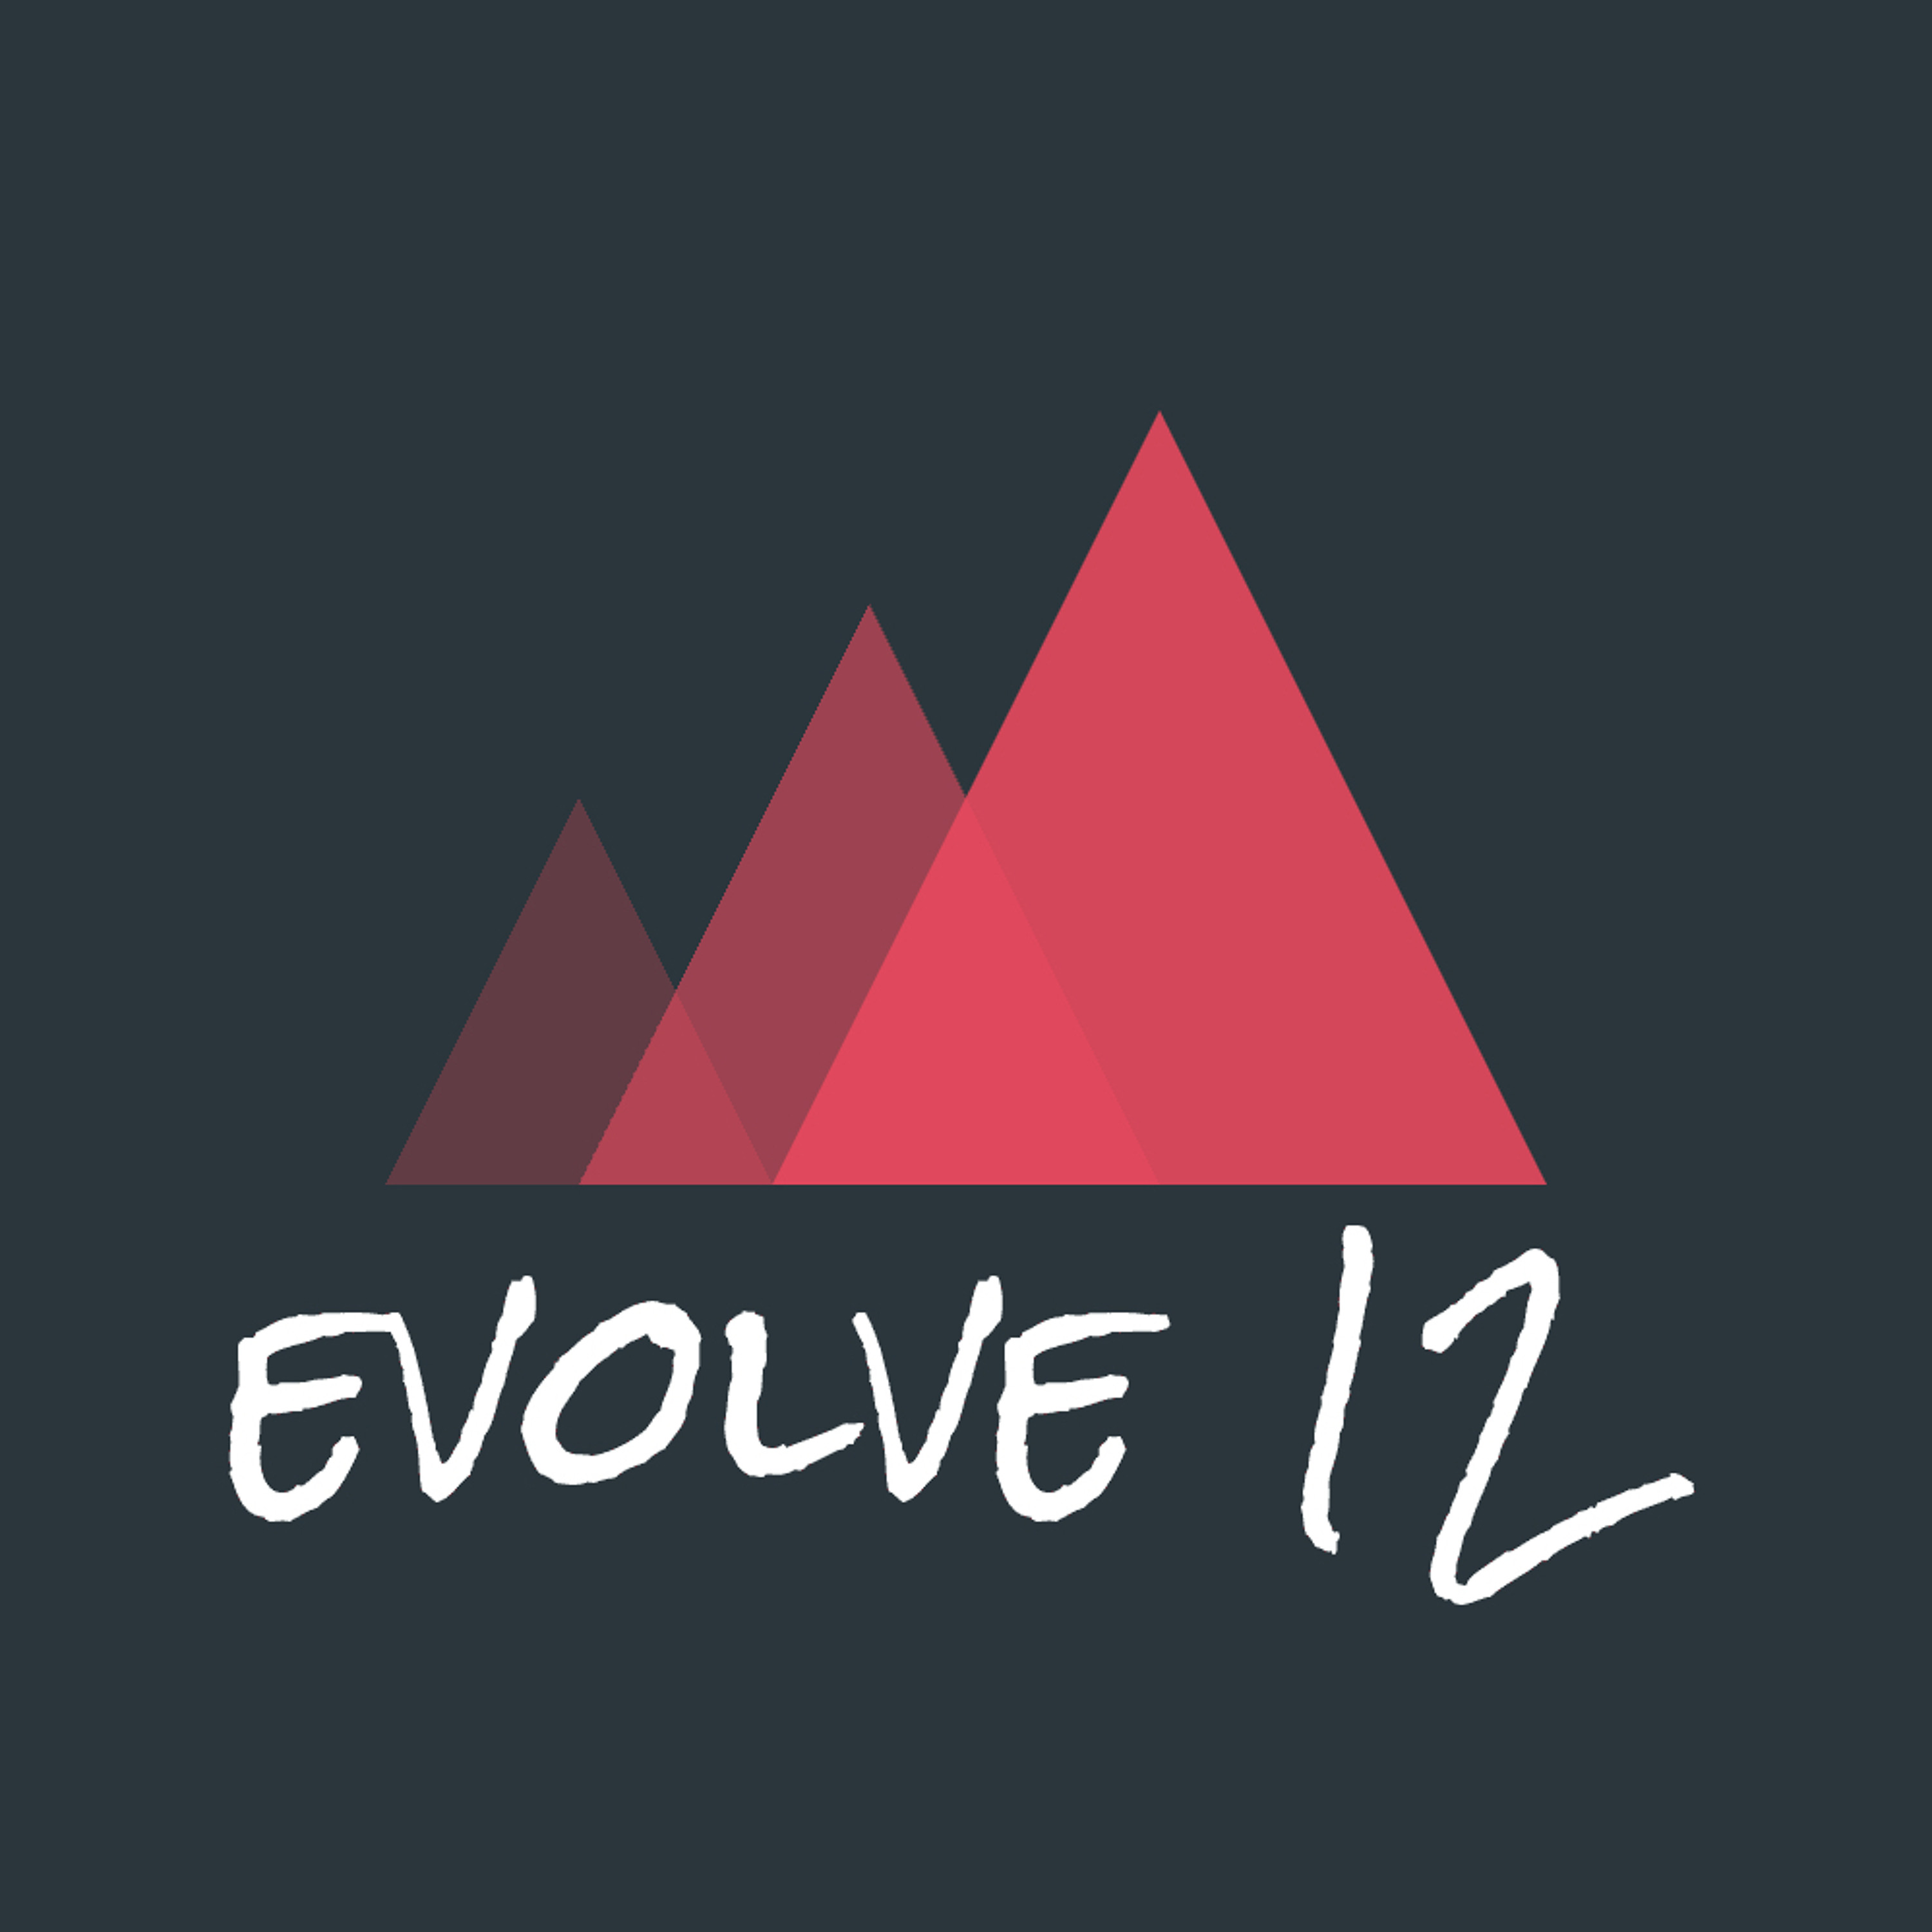 evolve 12